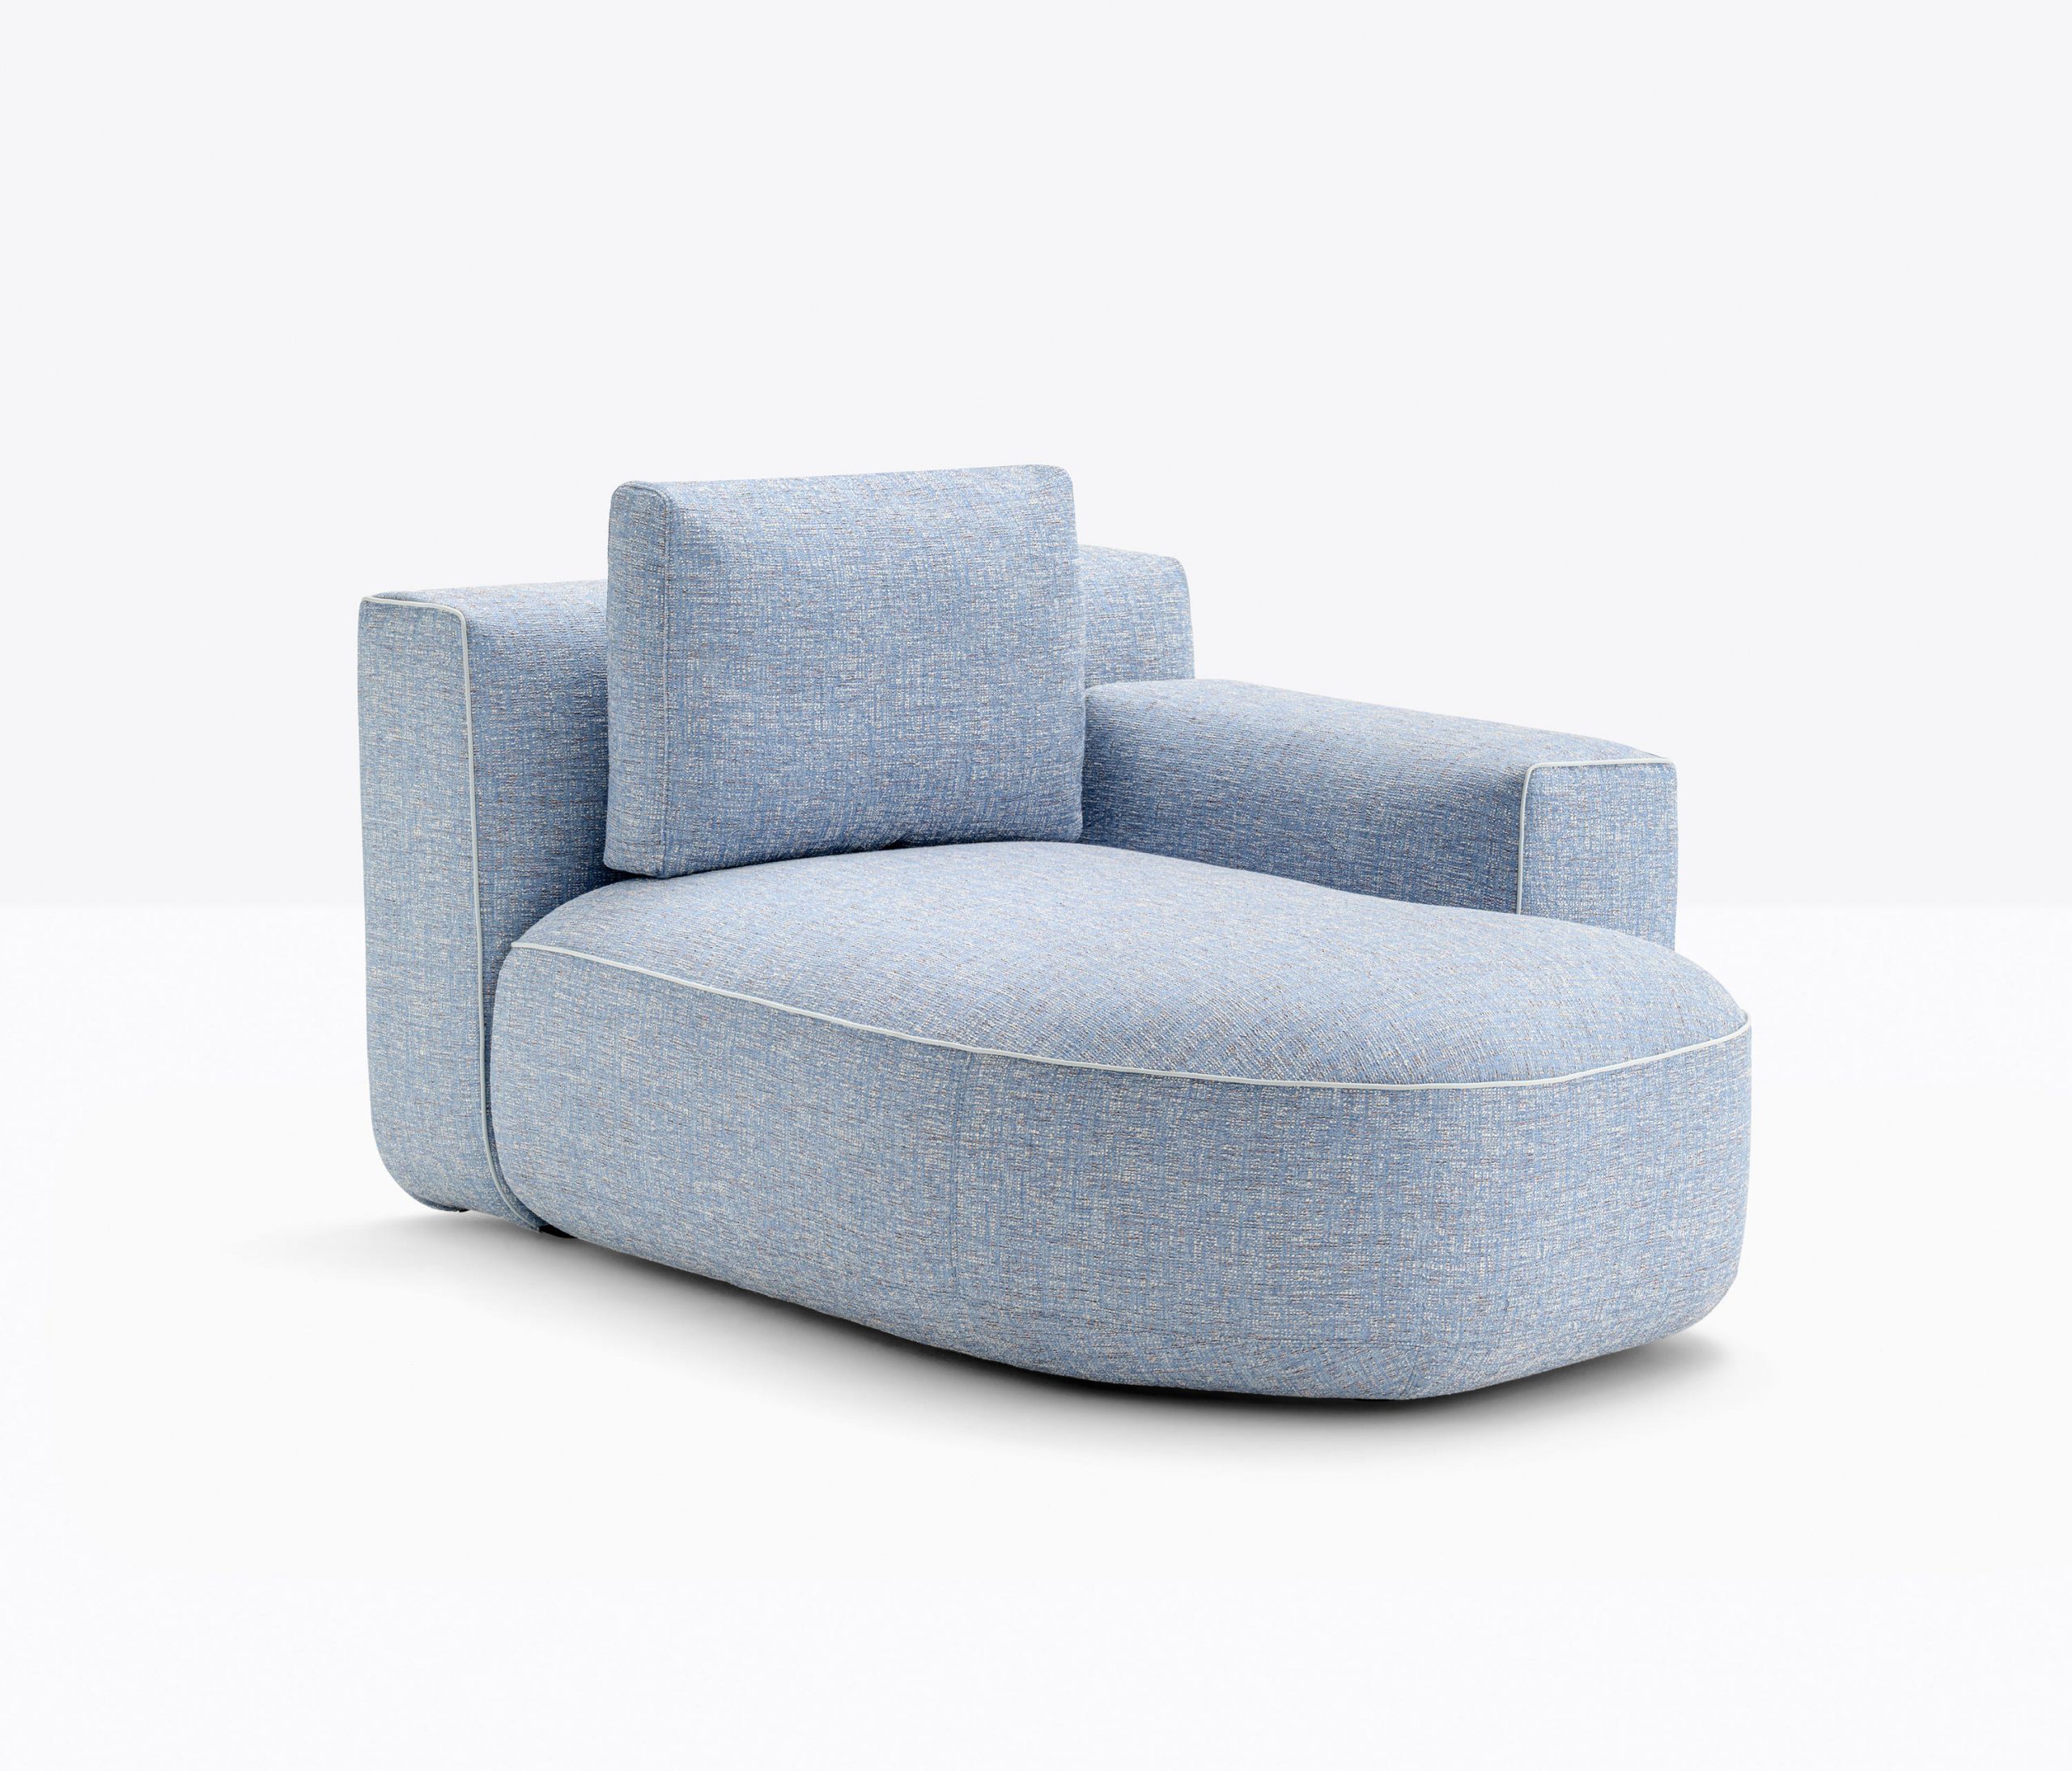 Jeff Modular Sofa by Patrick Norguet for Pedrali